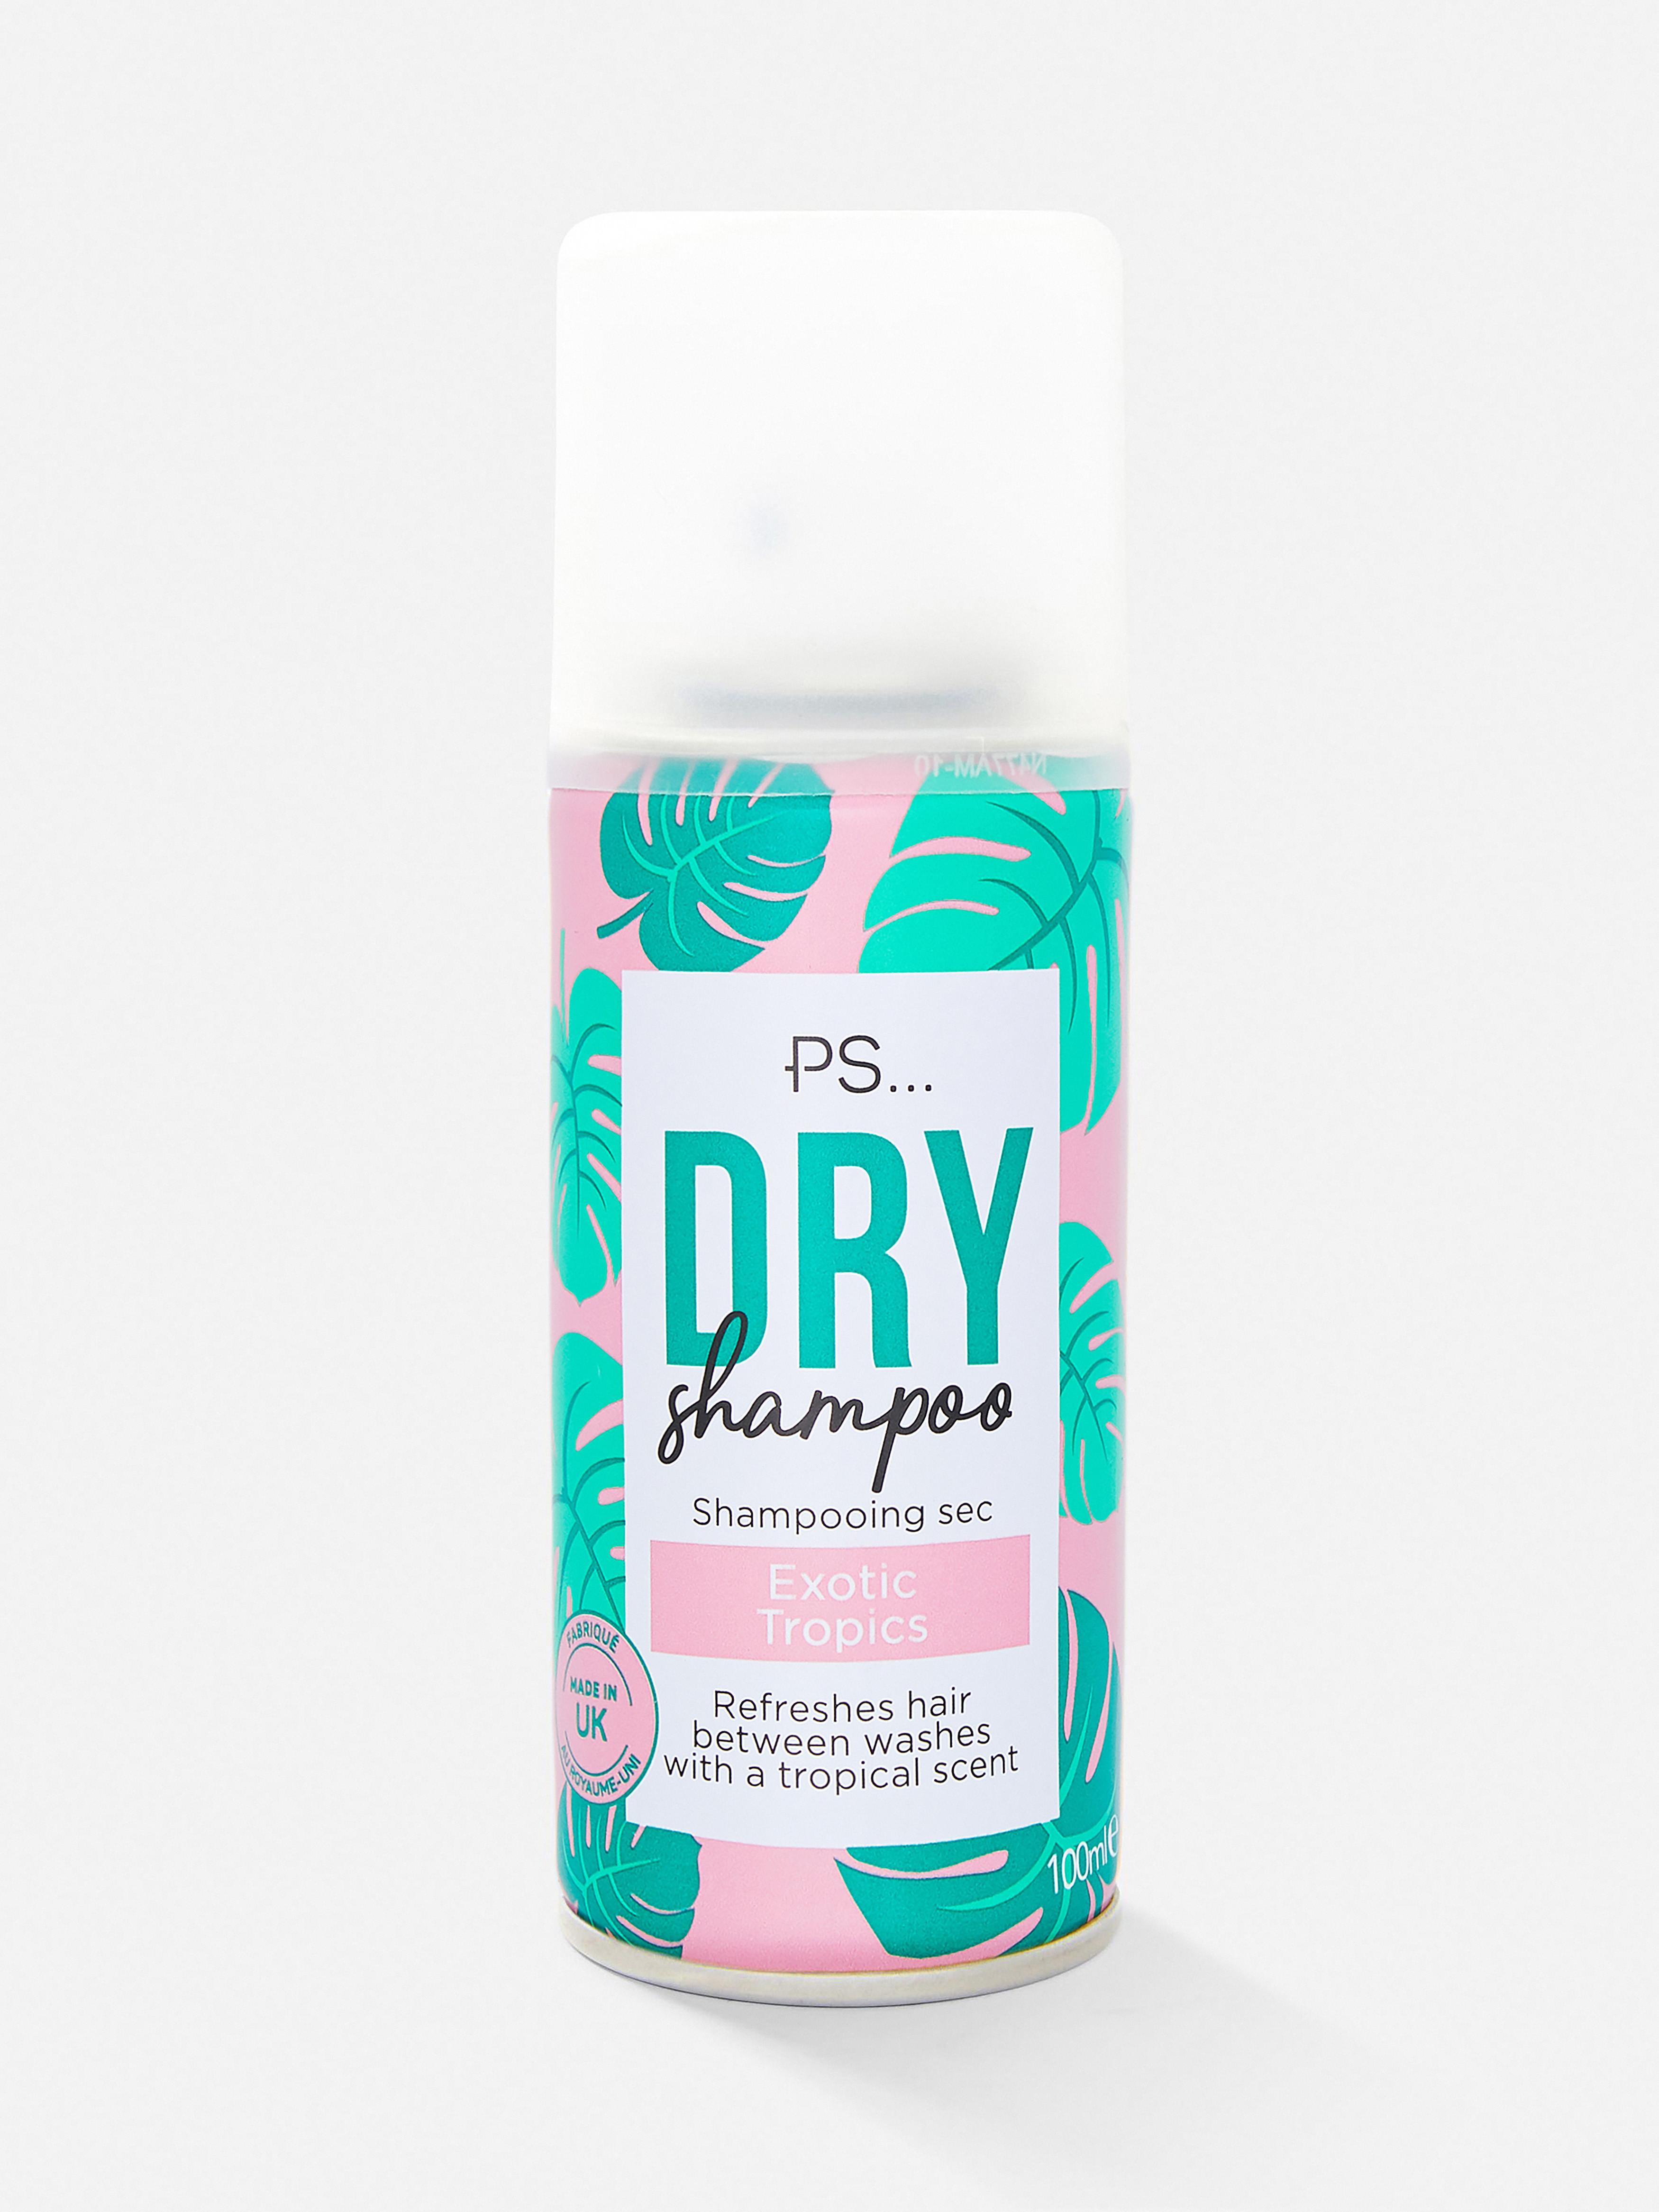 PS Exotic Tropics Dry Shampoo